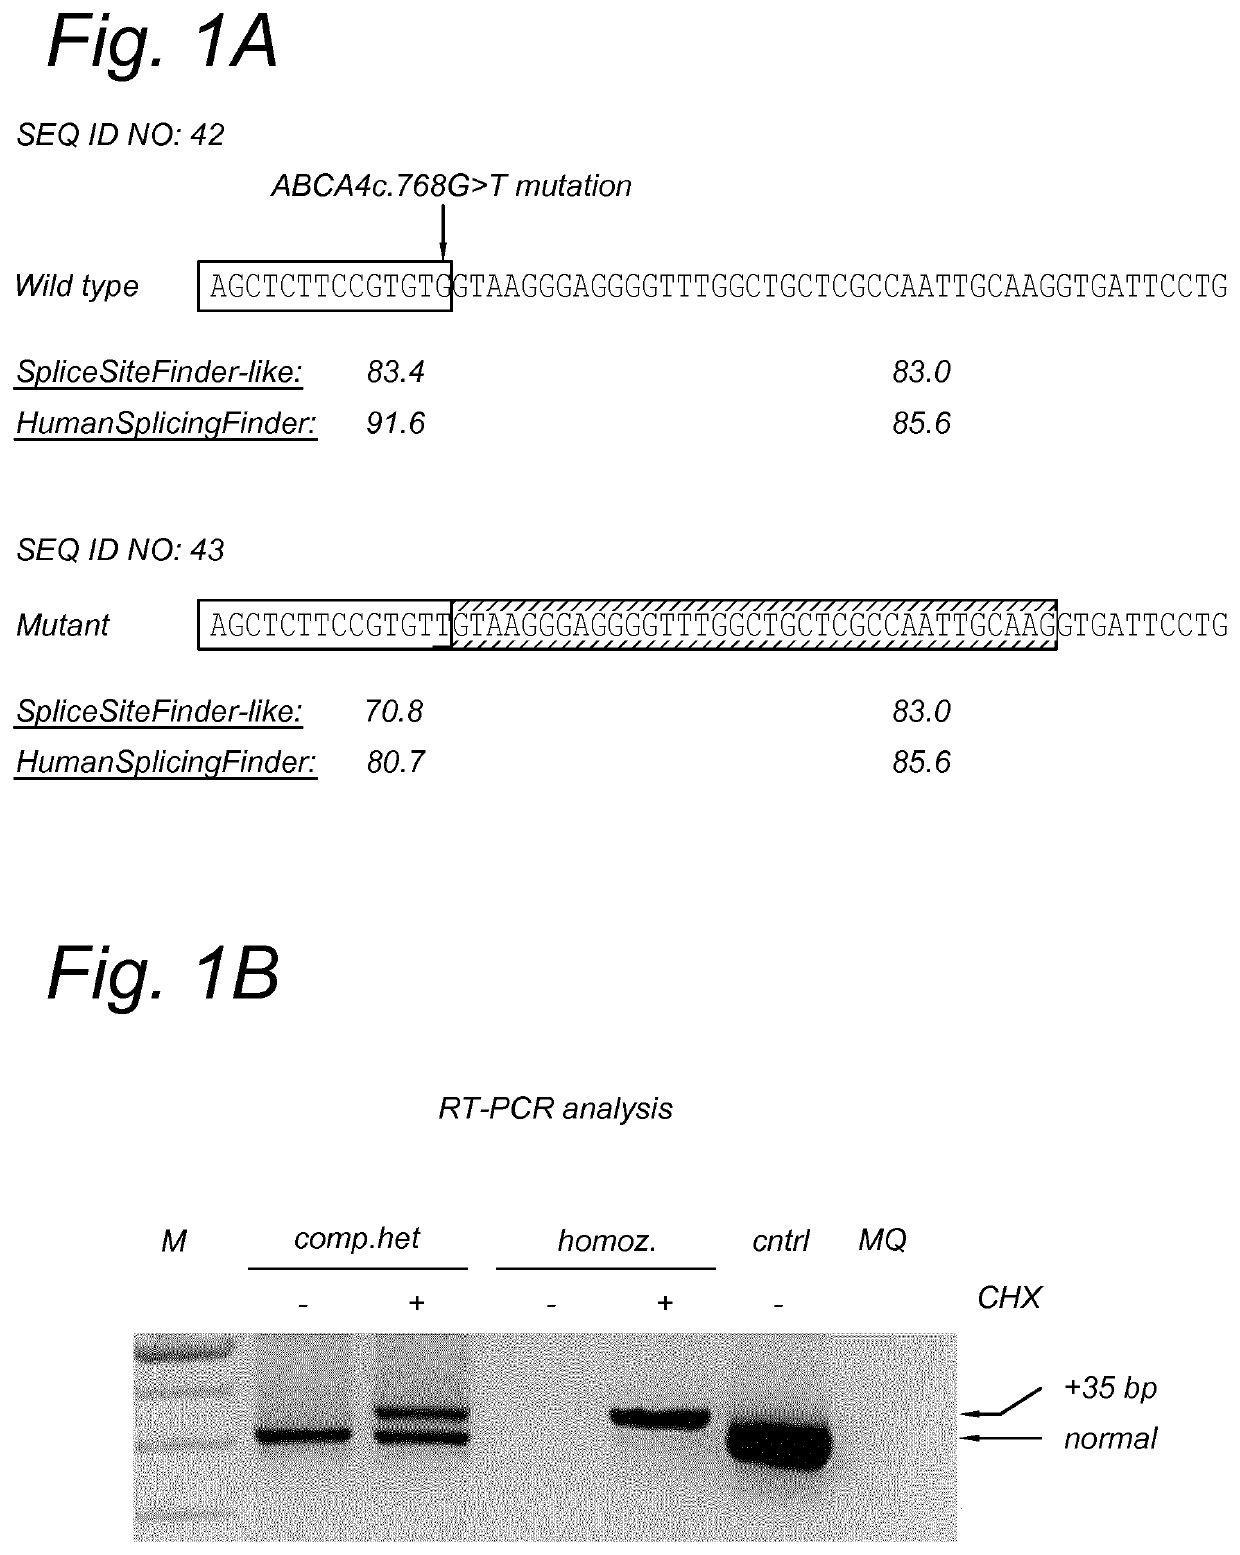 Antisense Oligonucleotides Rescue Aberrant Splicing of ABCA4